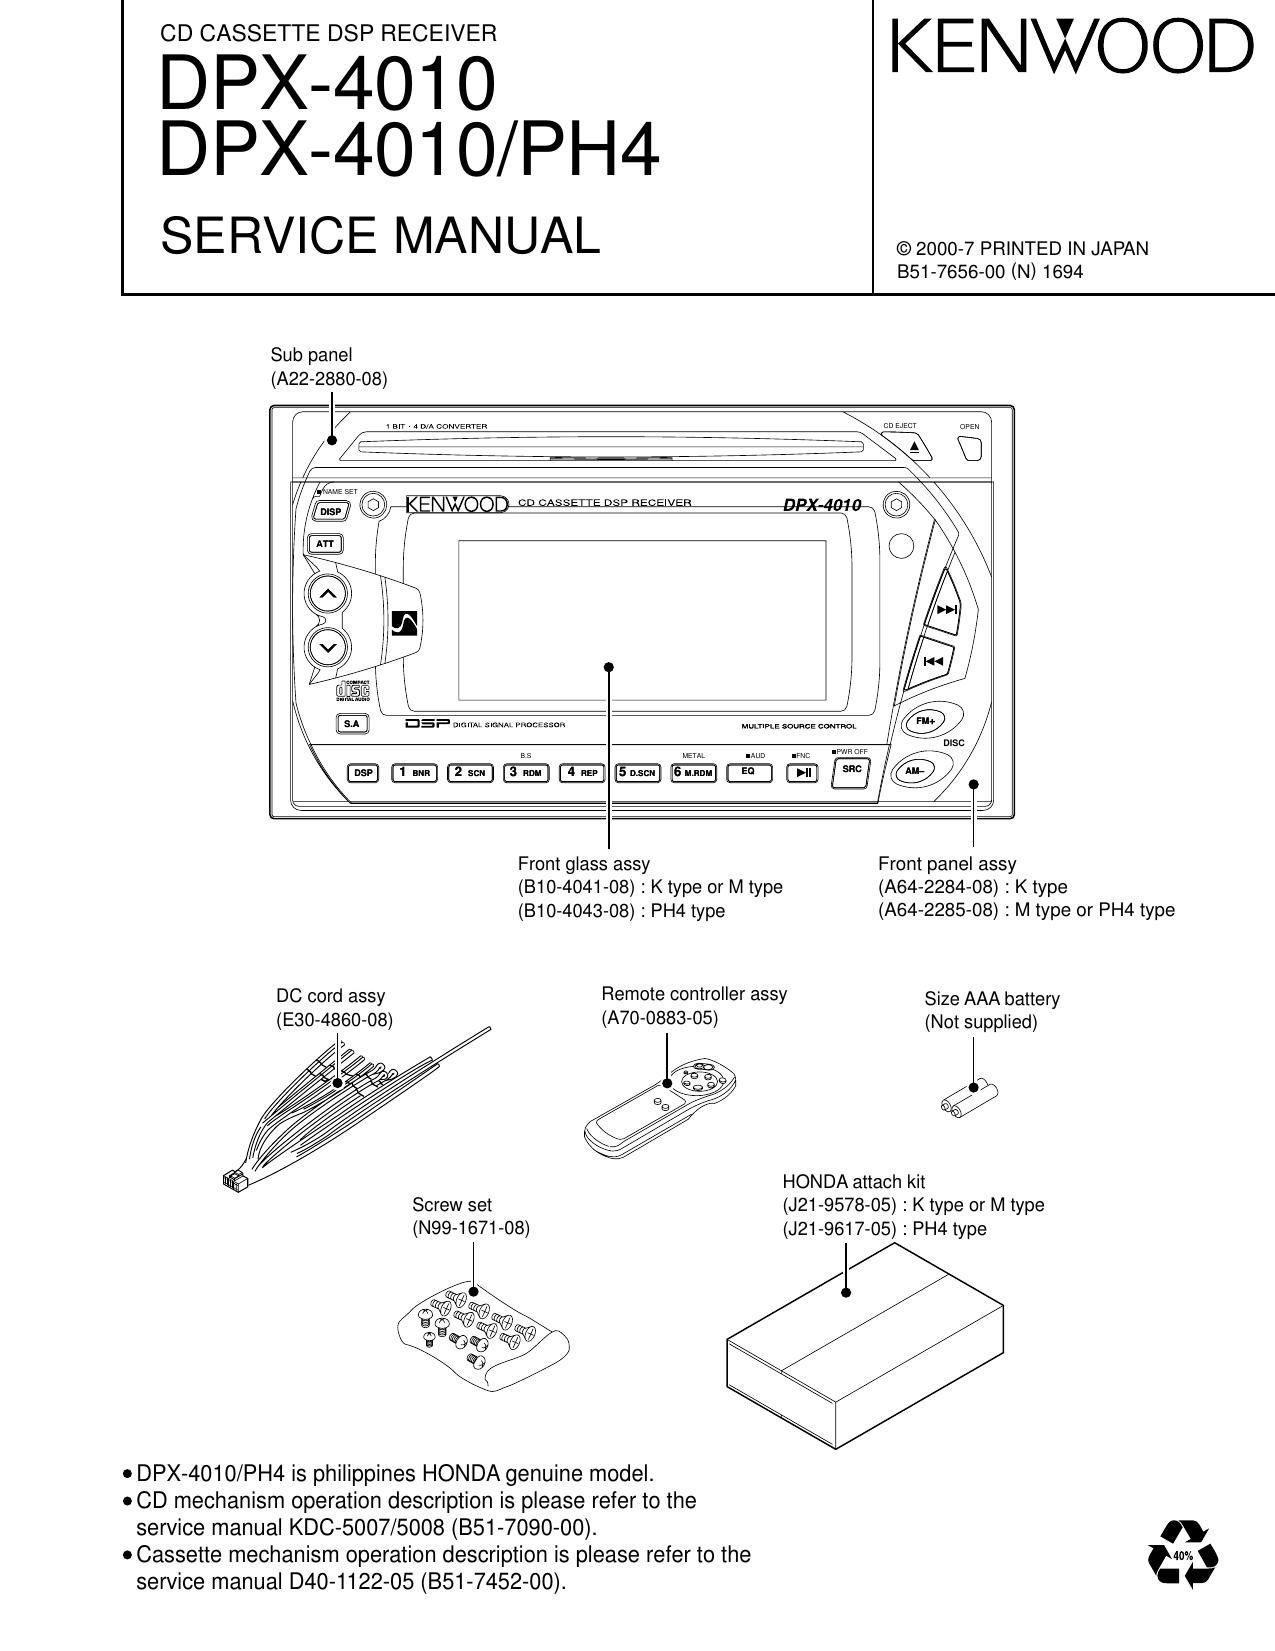 Kenwood DPX 4010 Service Manual